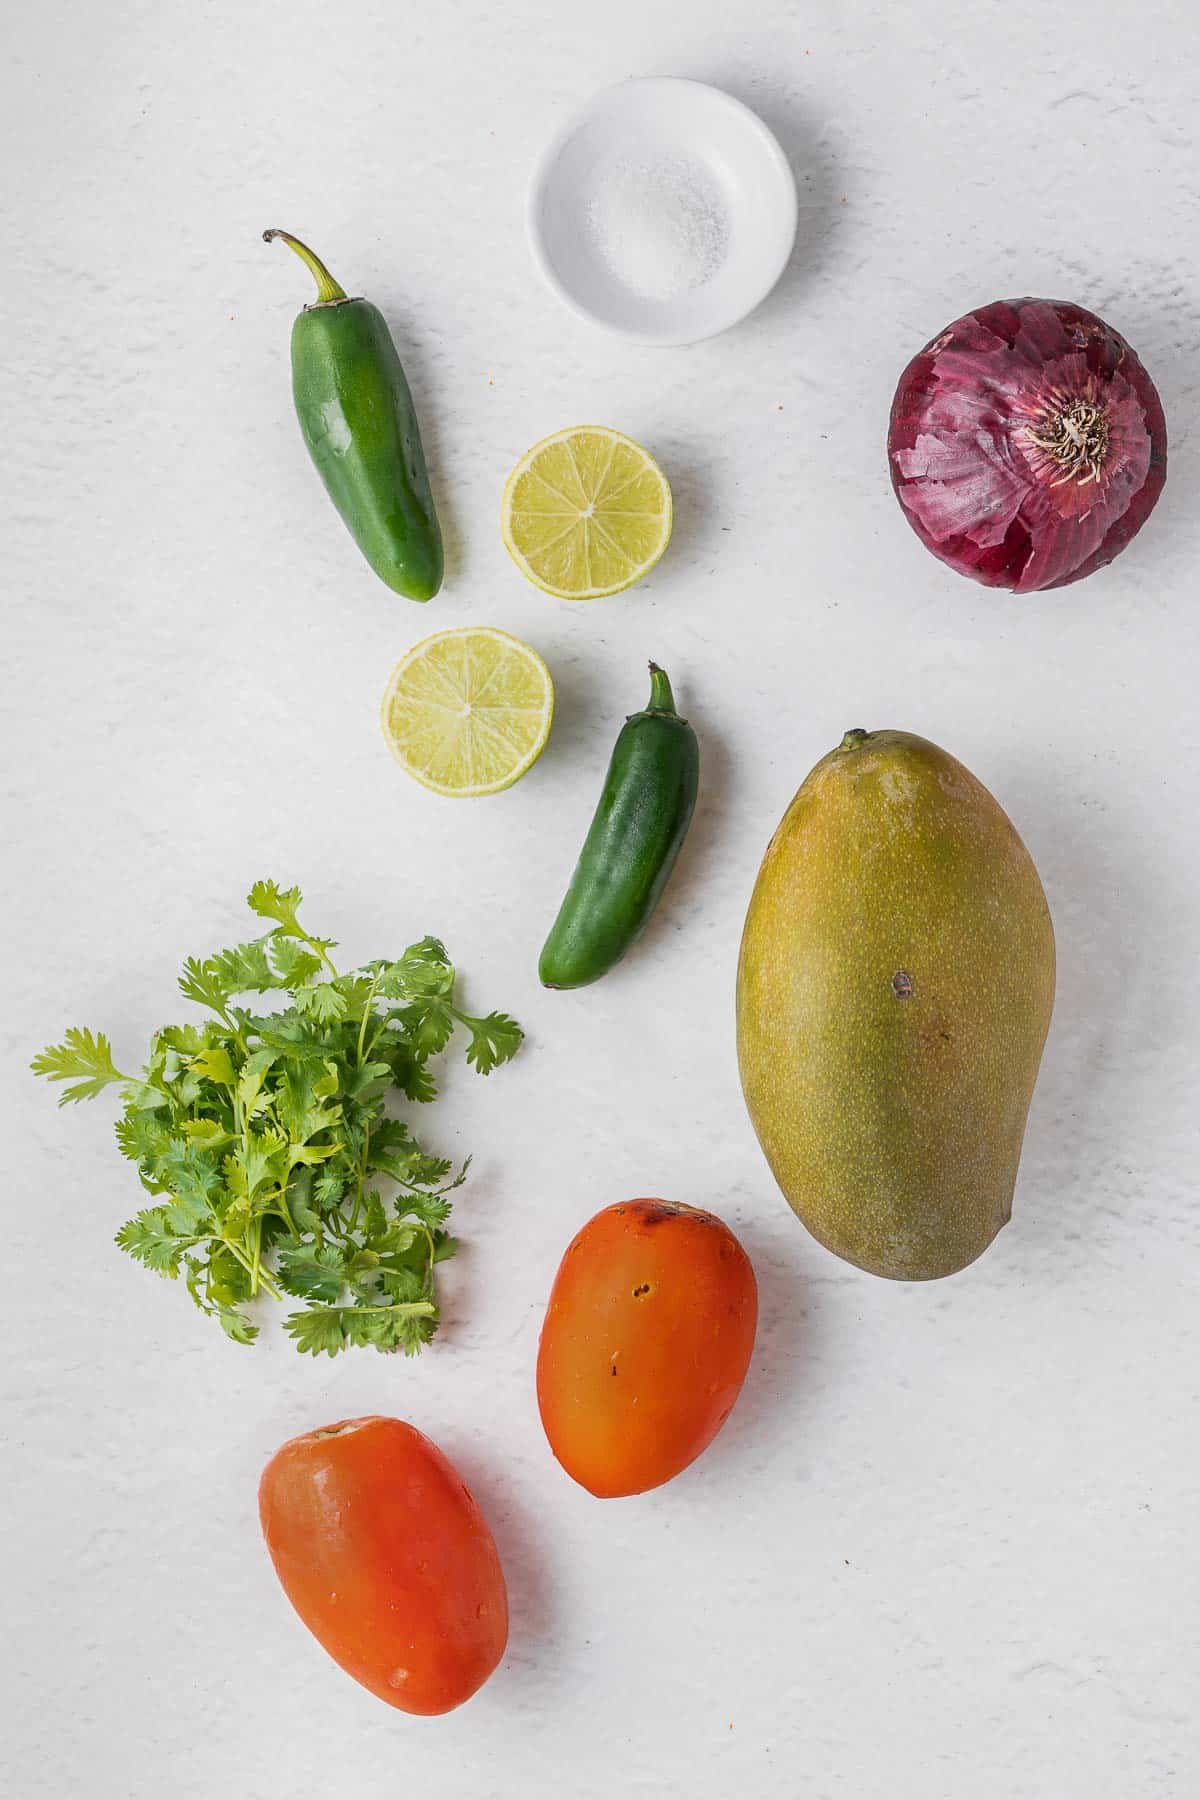 Ingredients for Mango Salsa - Mangos, tomatoes, red onion, jalapeño, cilantro, limes and salt.